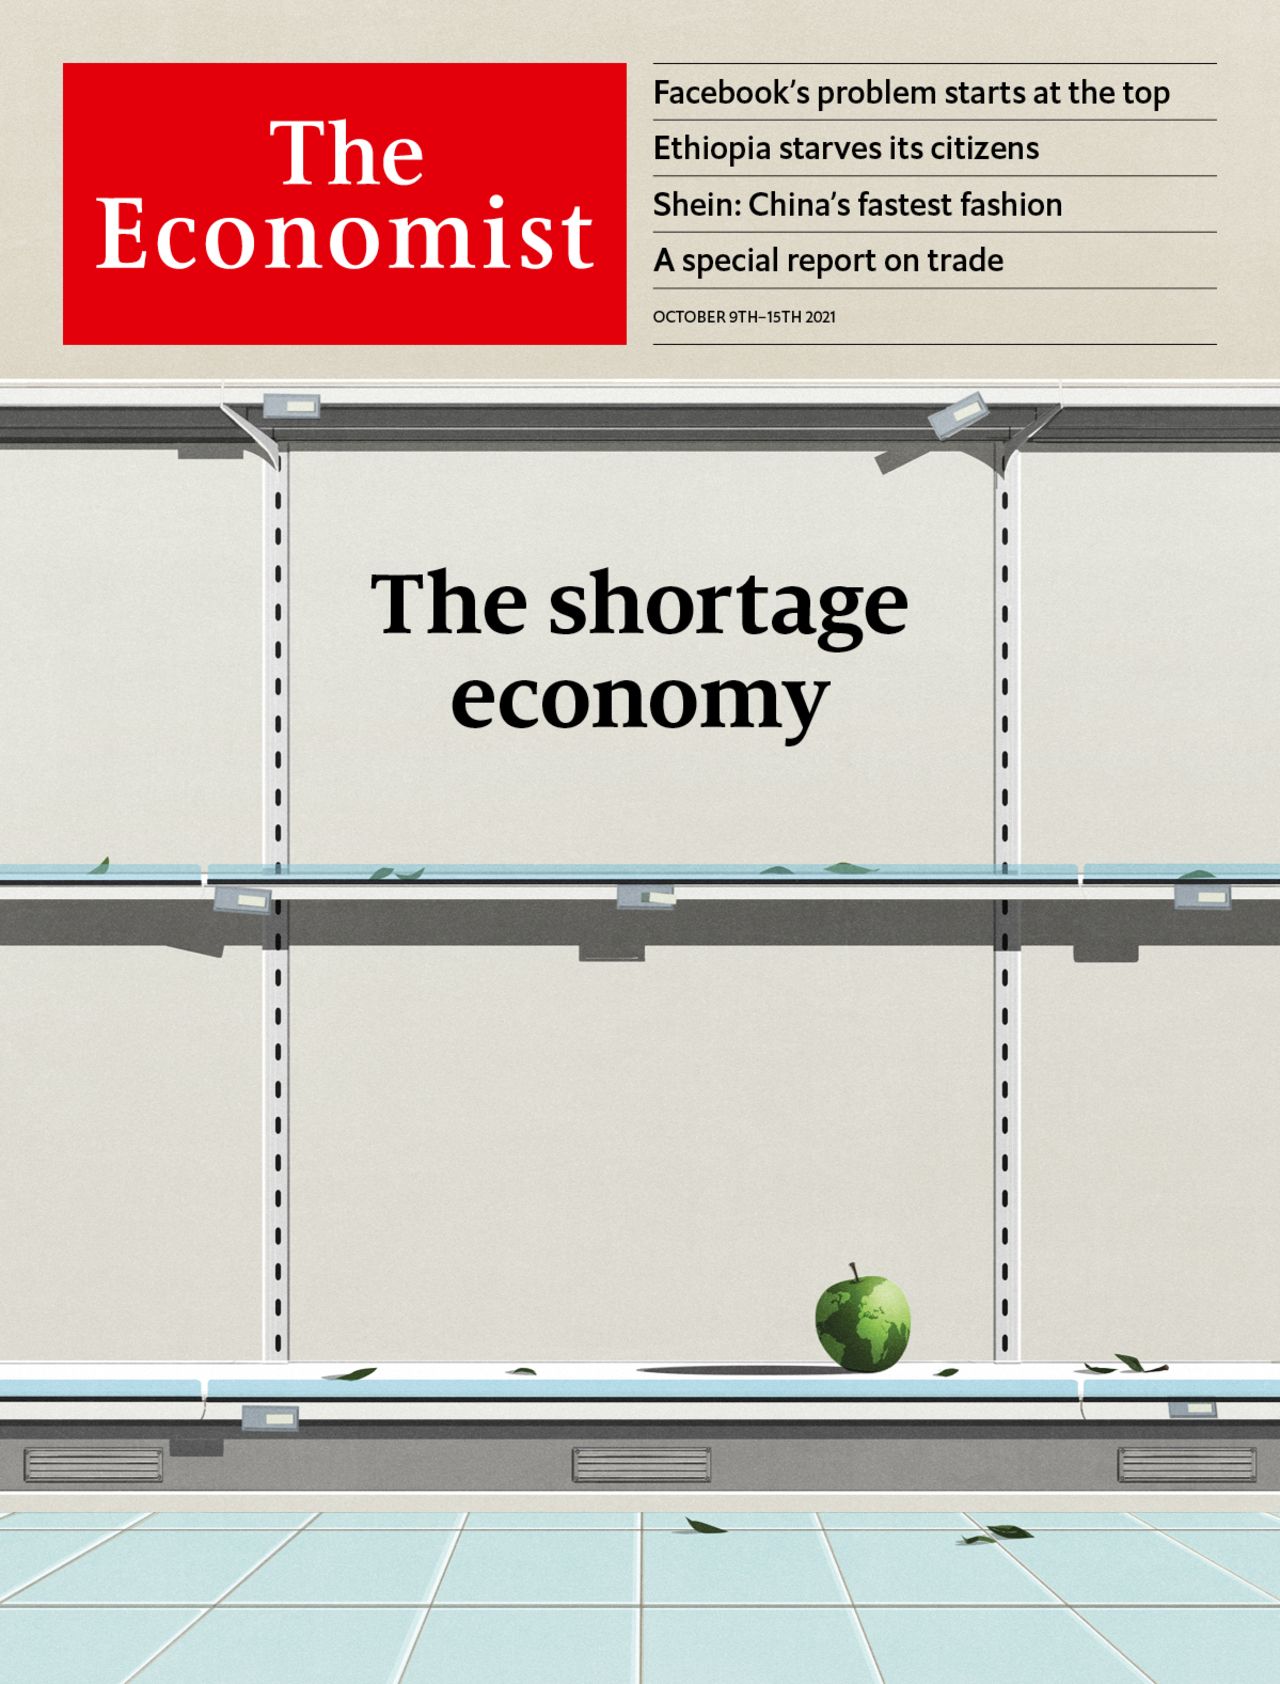 The shortage economy